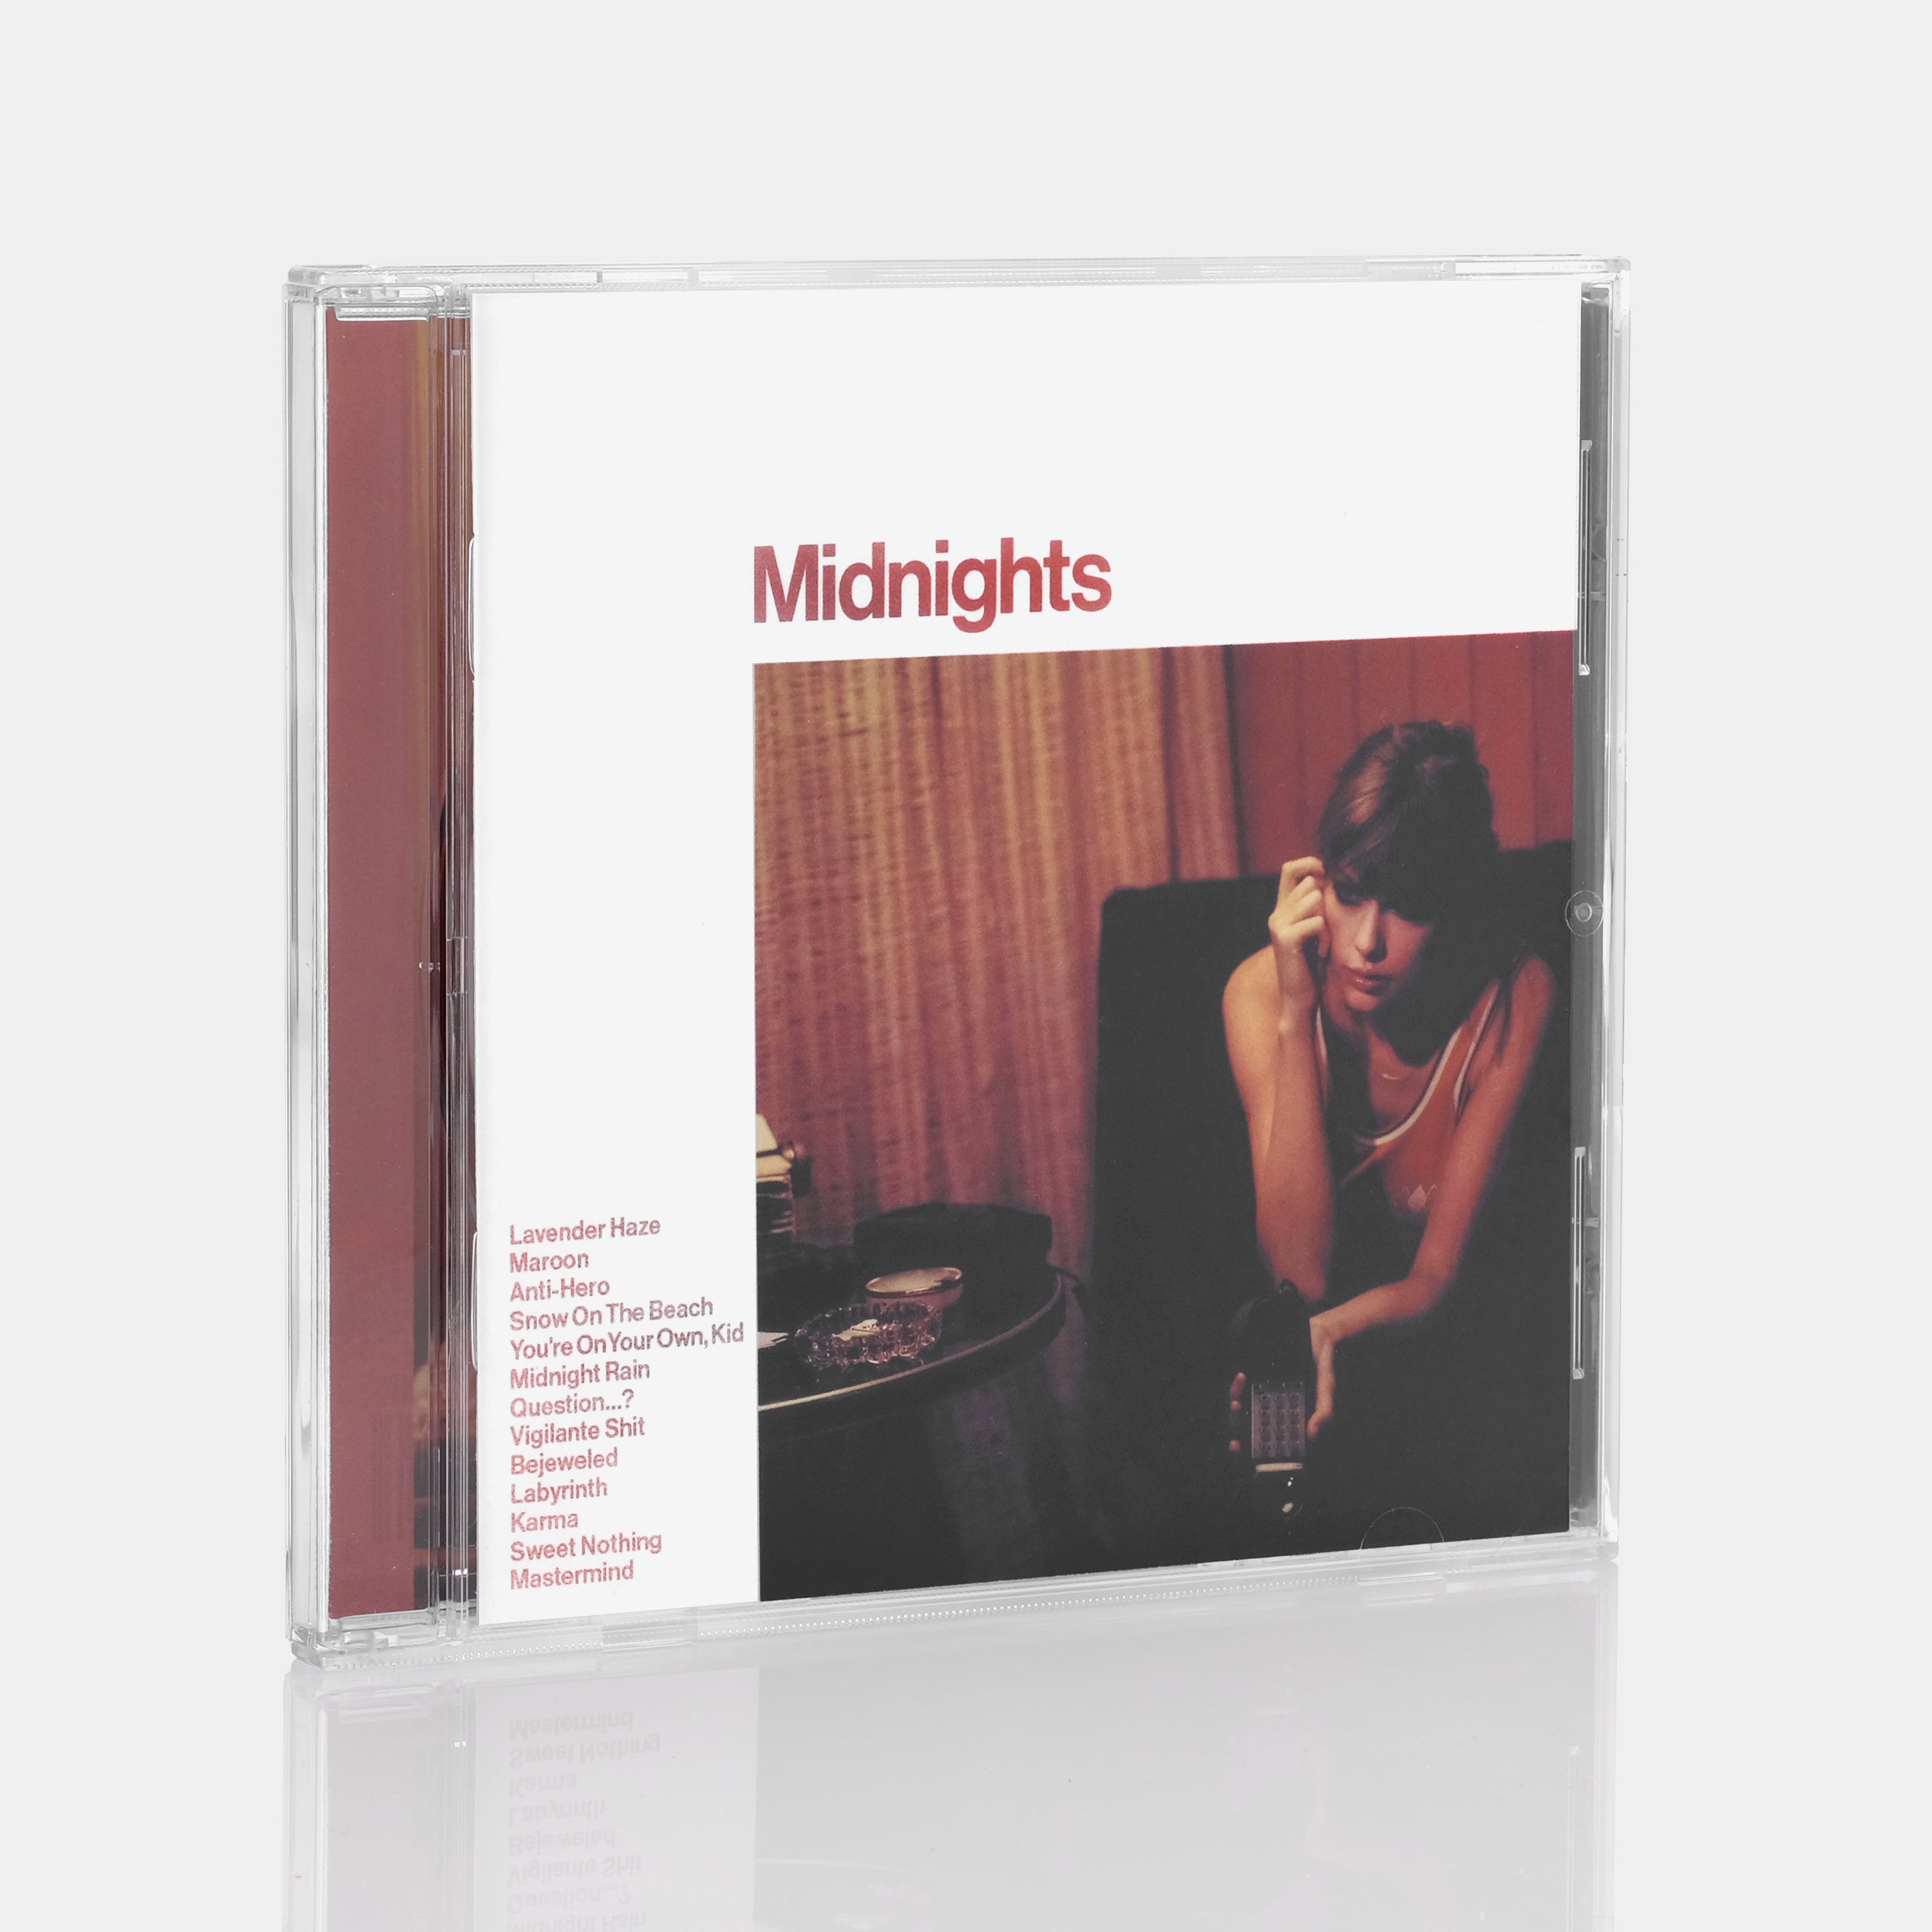 Taylor Swift - Midnights Blood Moon CD (Explicit)